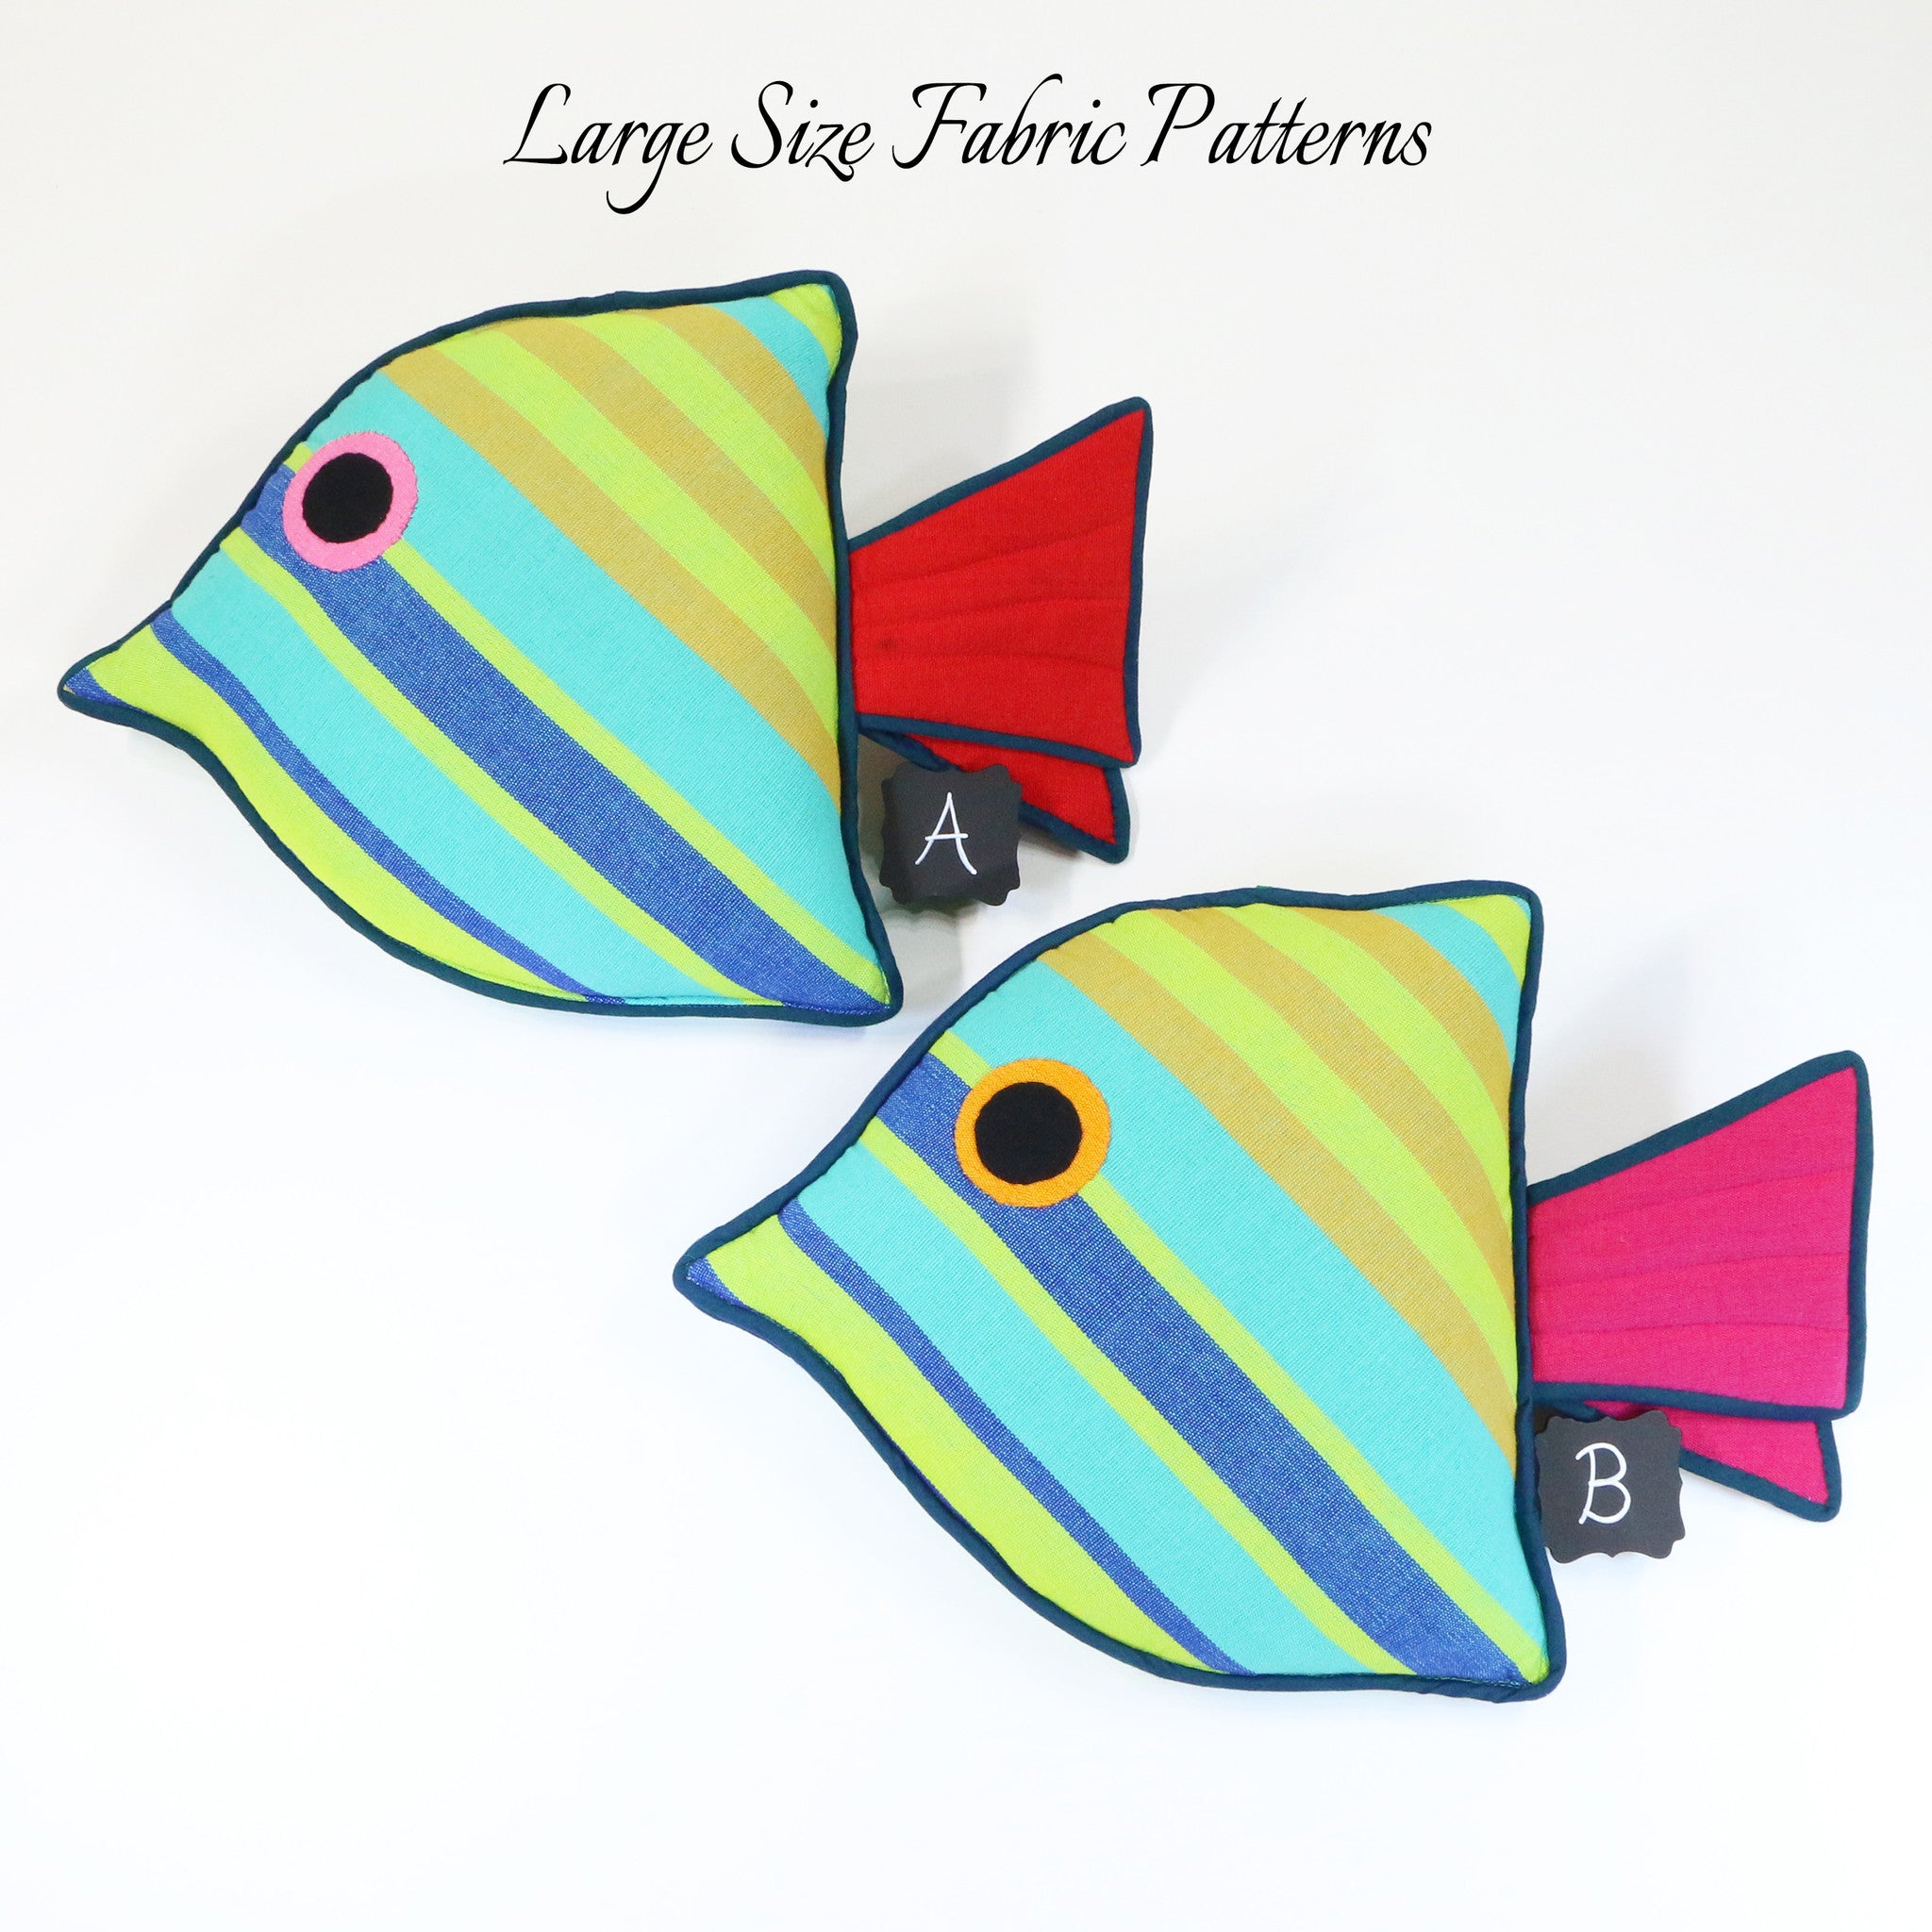 Morgan, the Juvenile Fish – large size fabric patterns shown